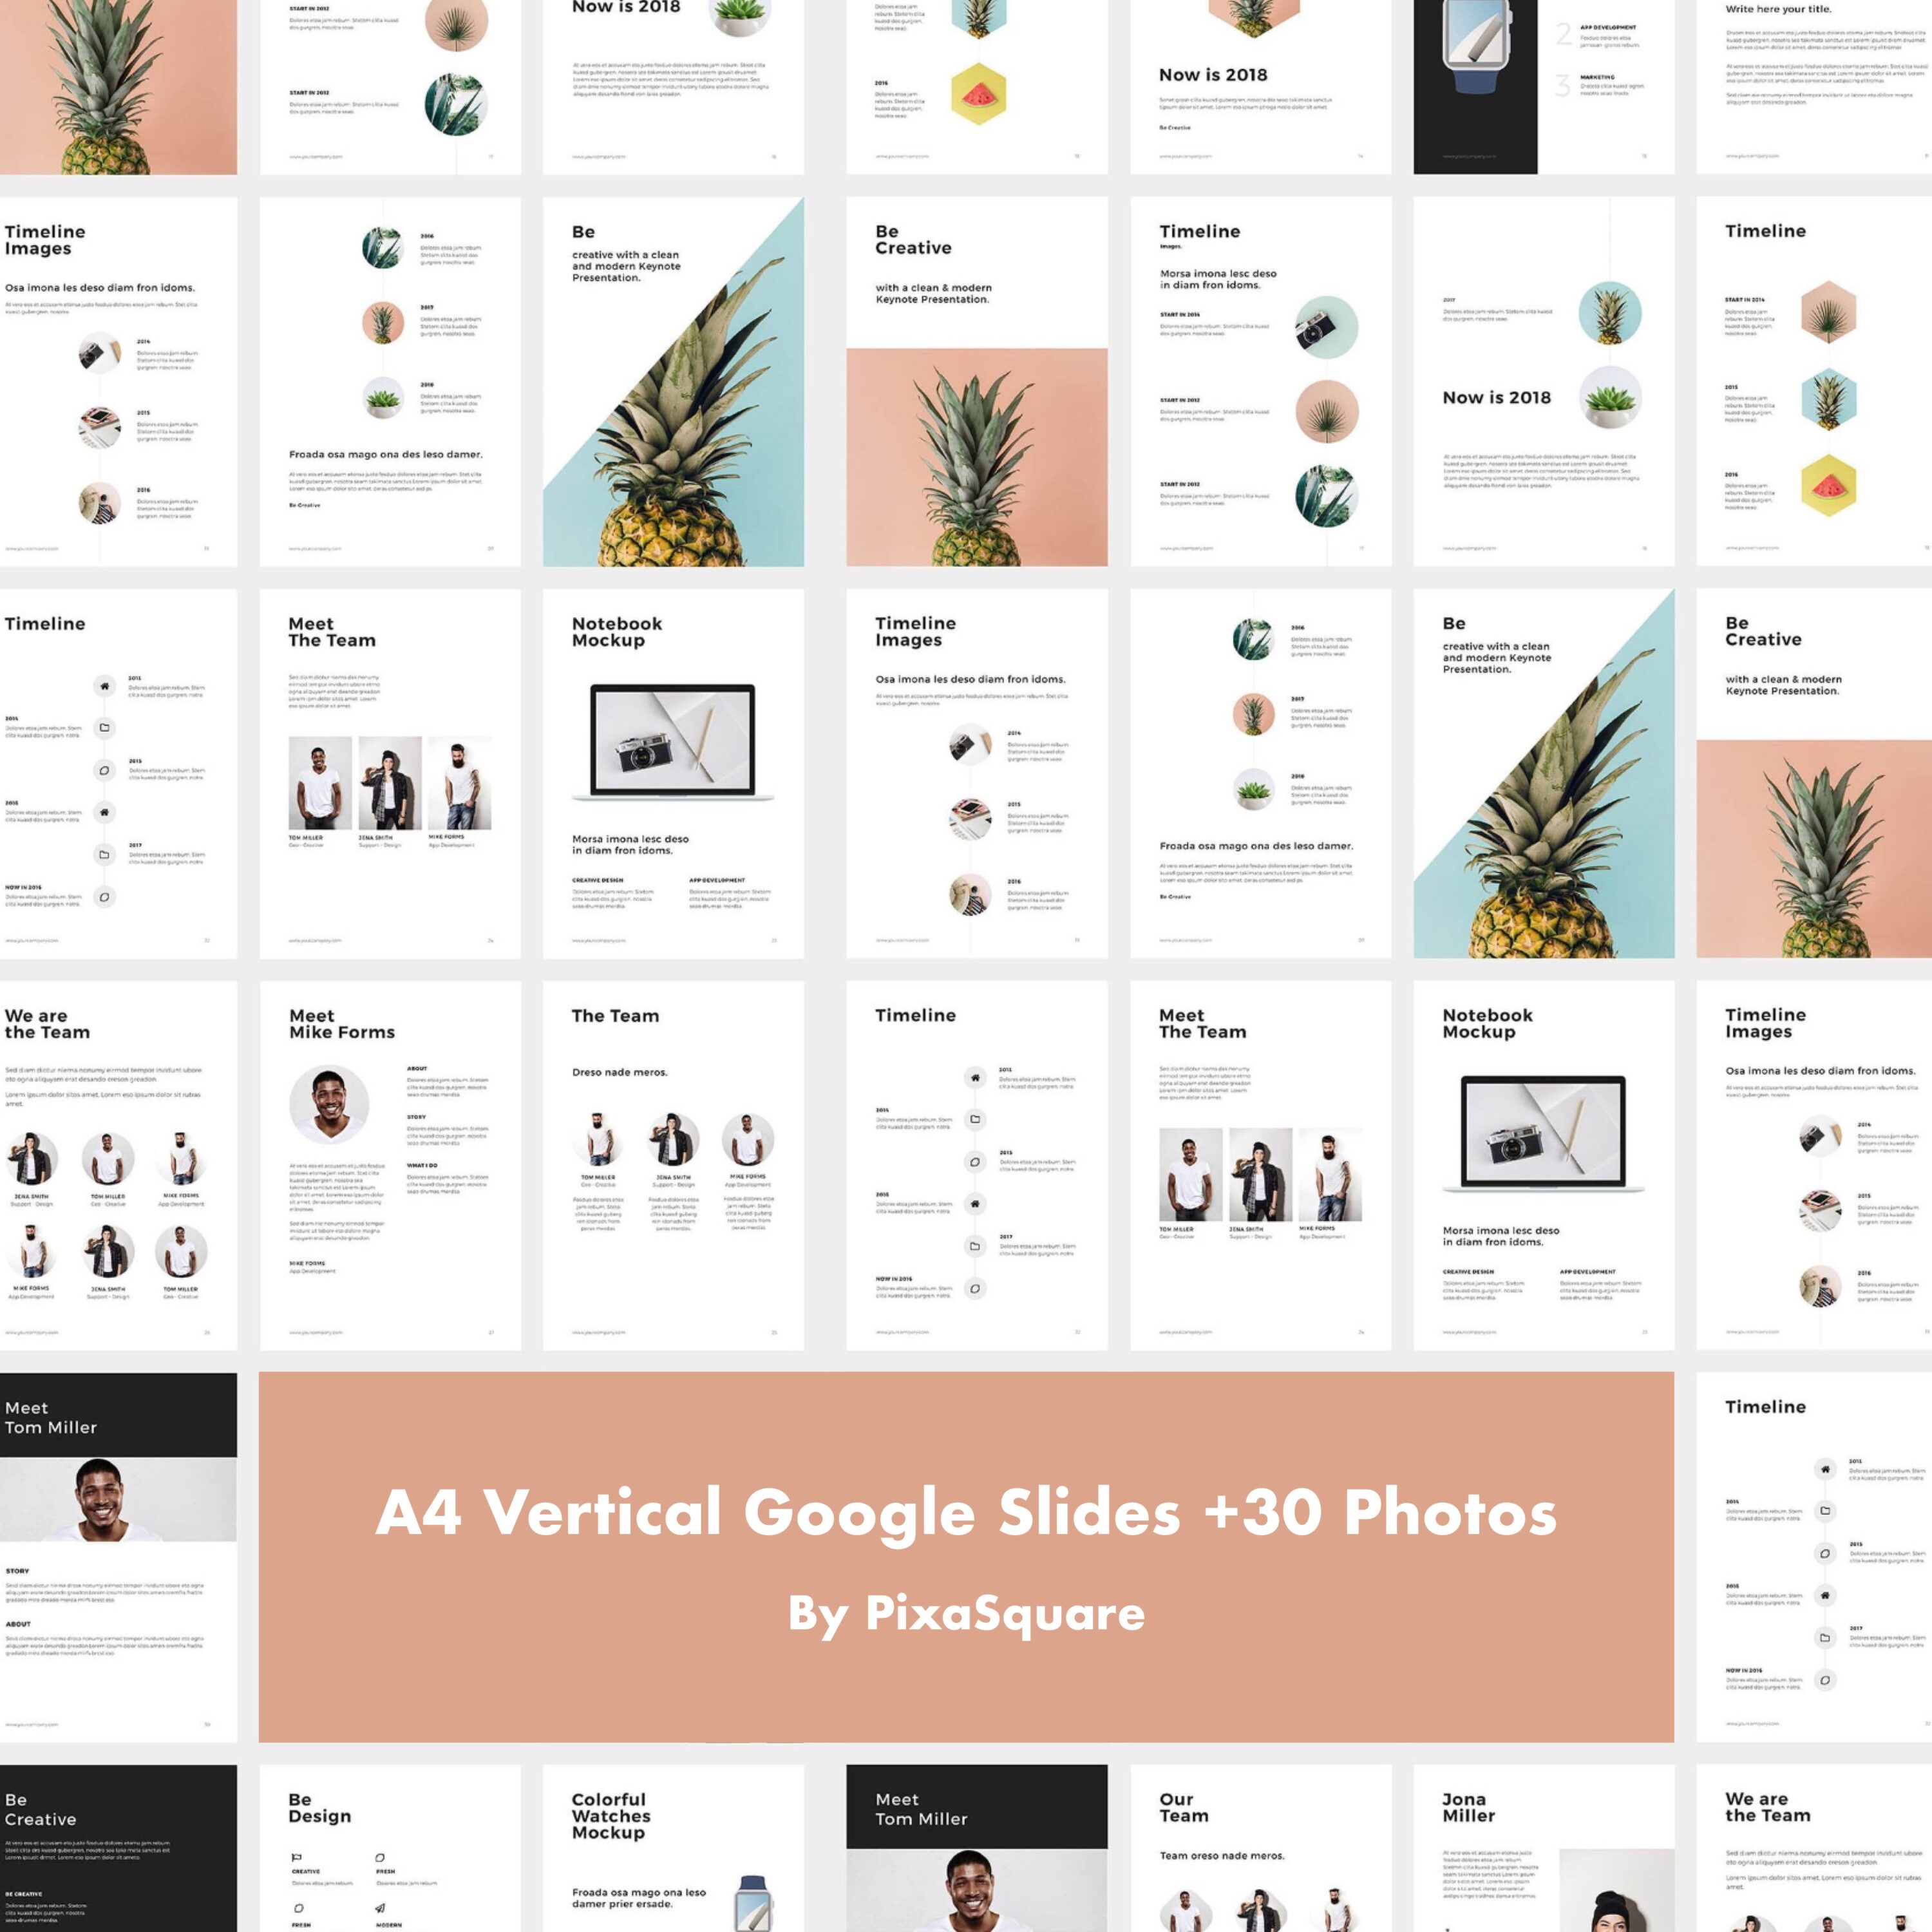 A4 Vertical Google Slides +30 Photos.